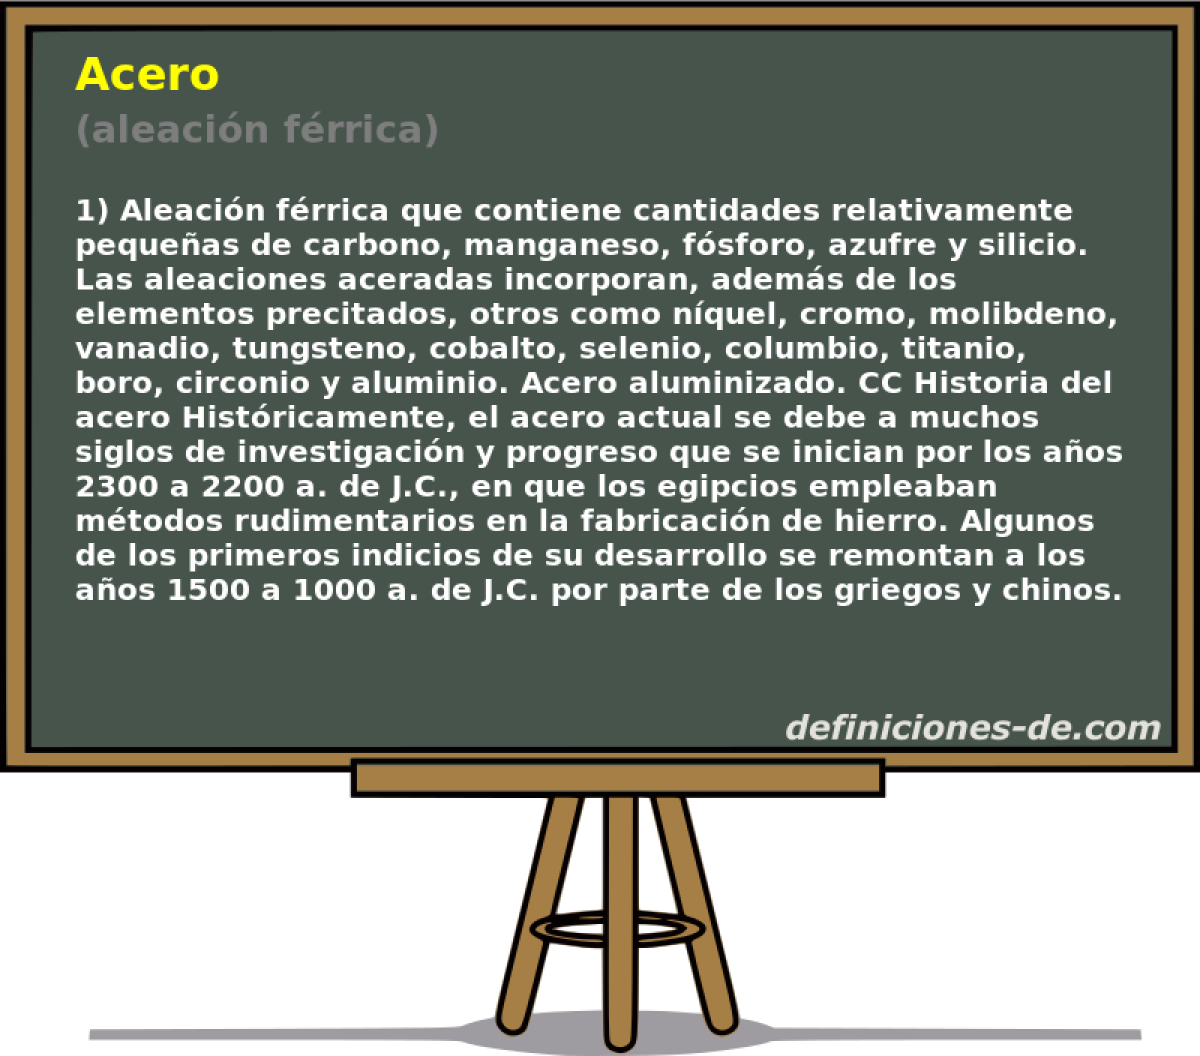 Acero (aleacin frrica)